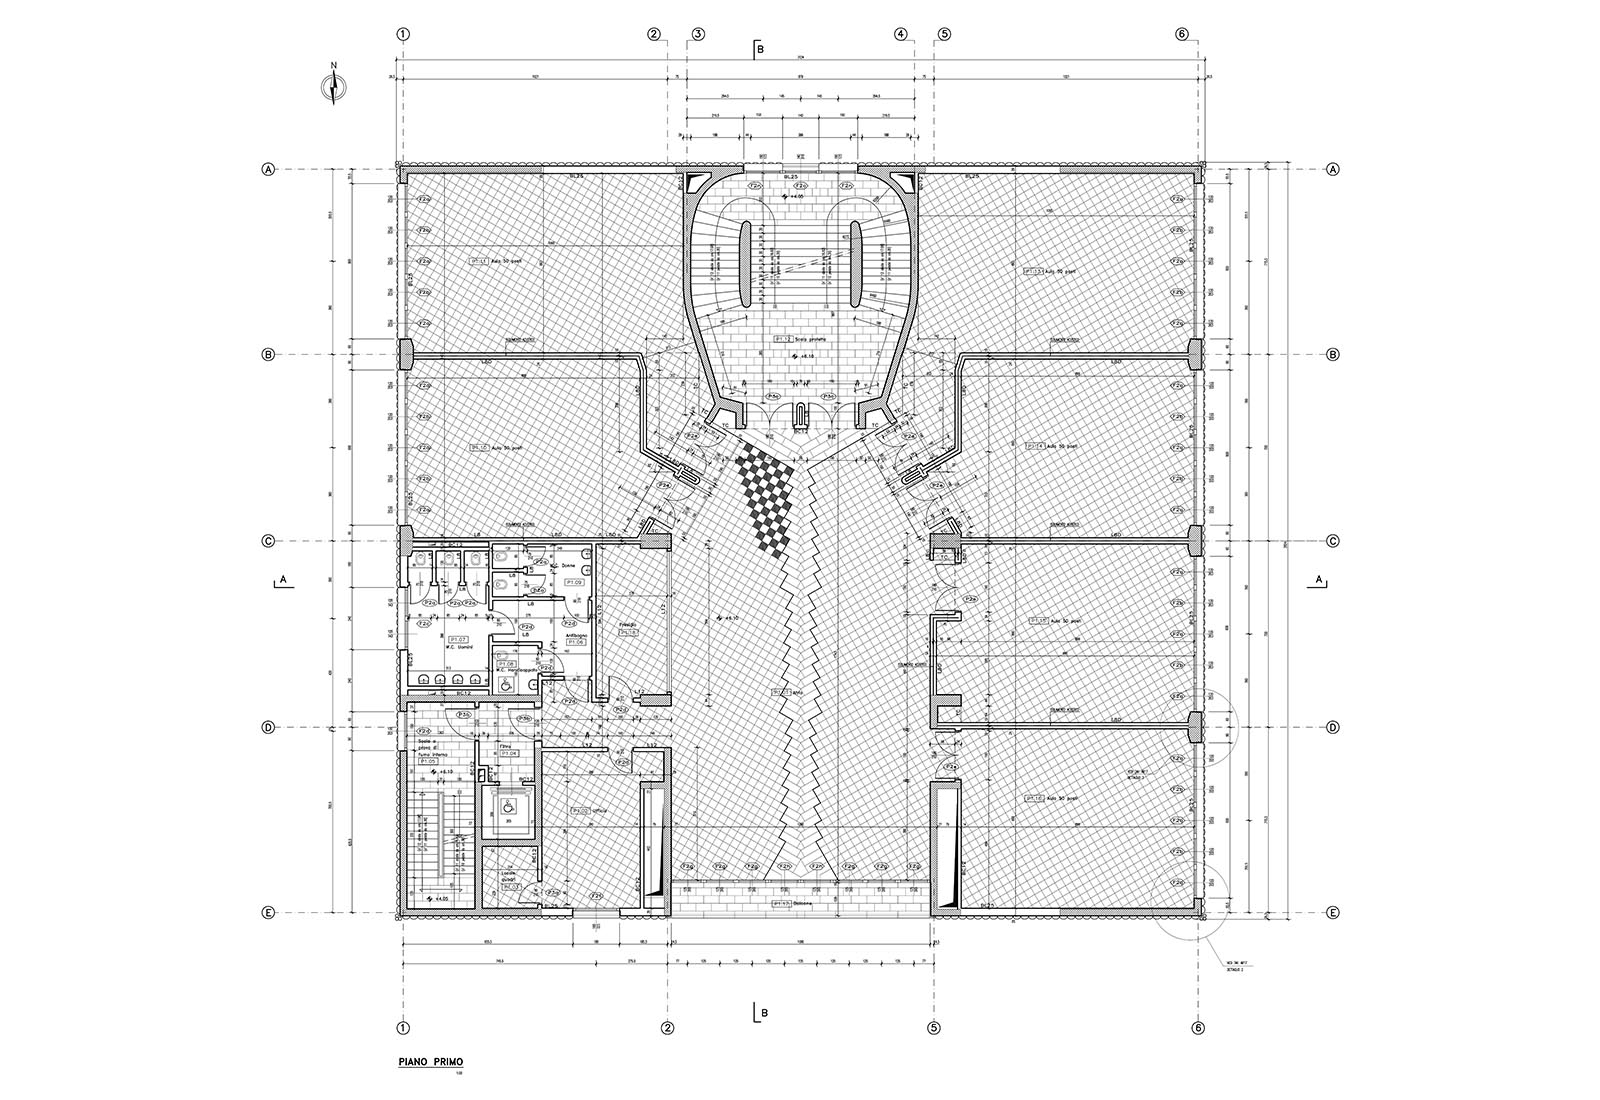 Building 25 Politecnico di Milano - First floor plan